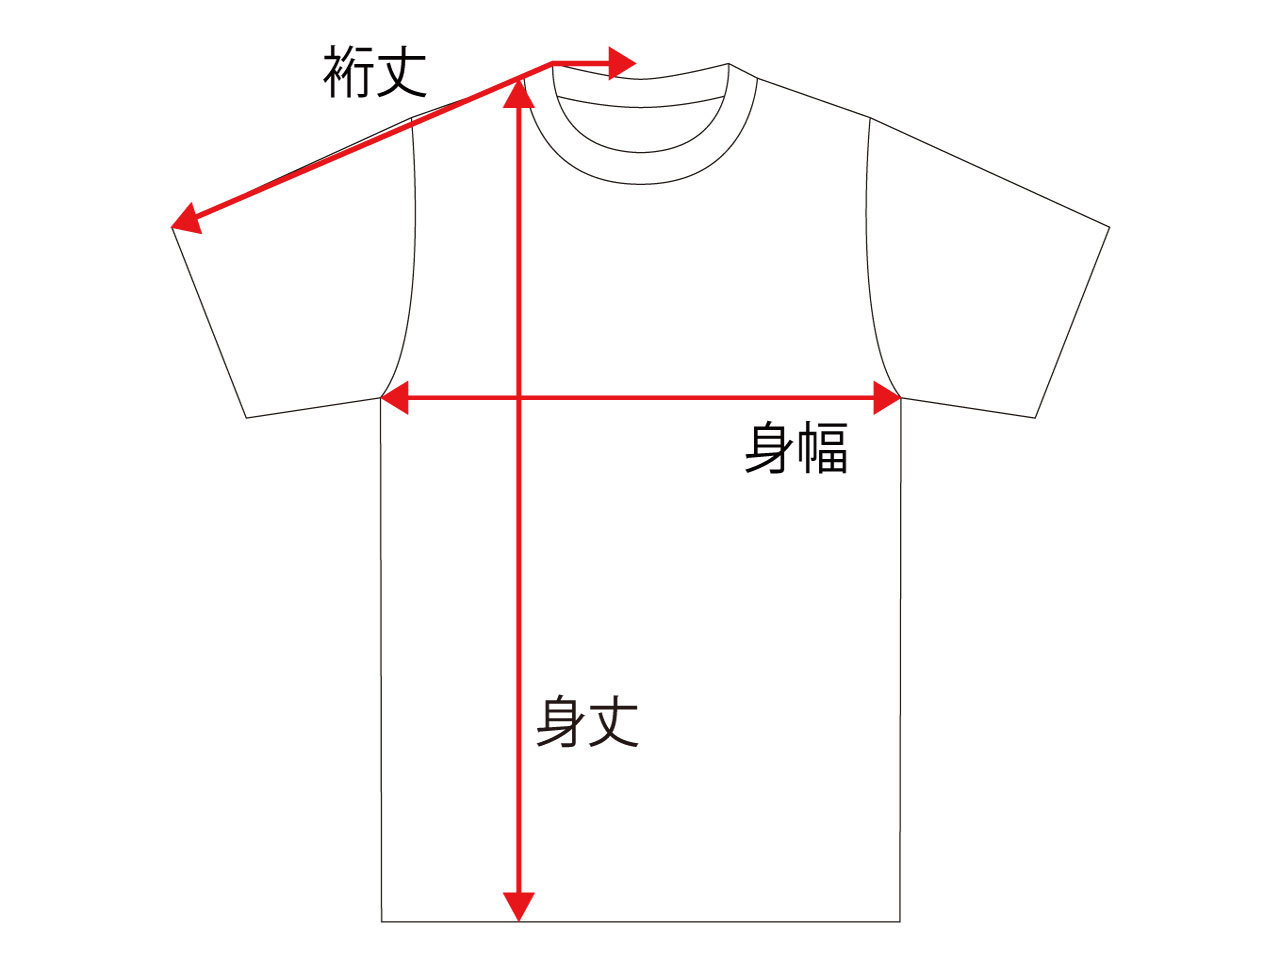 Navigator(ナビゲーター) Logo T-shirt / Black